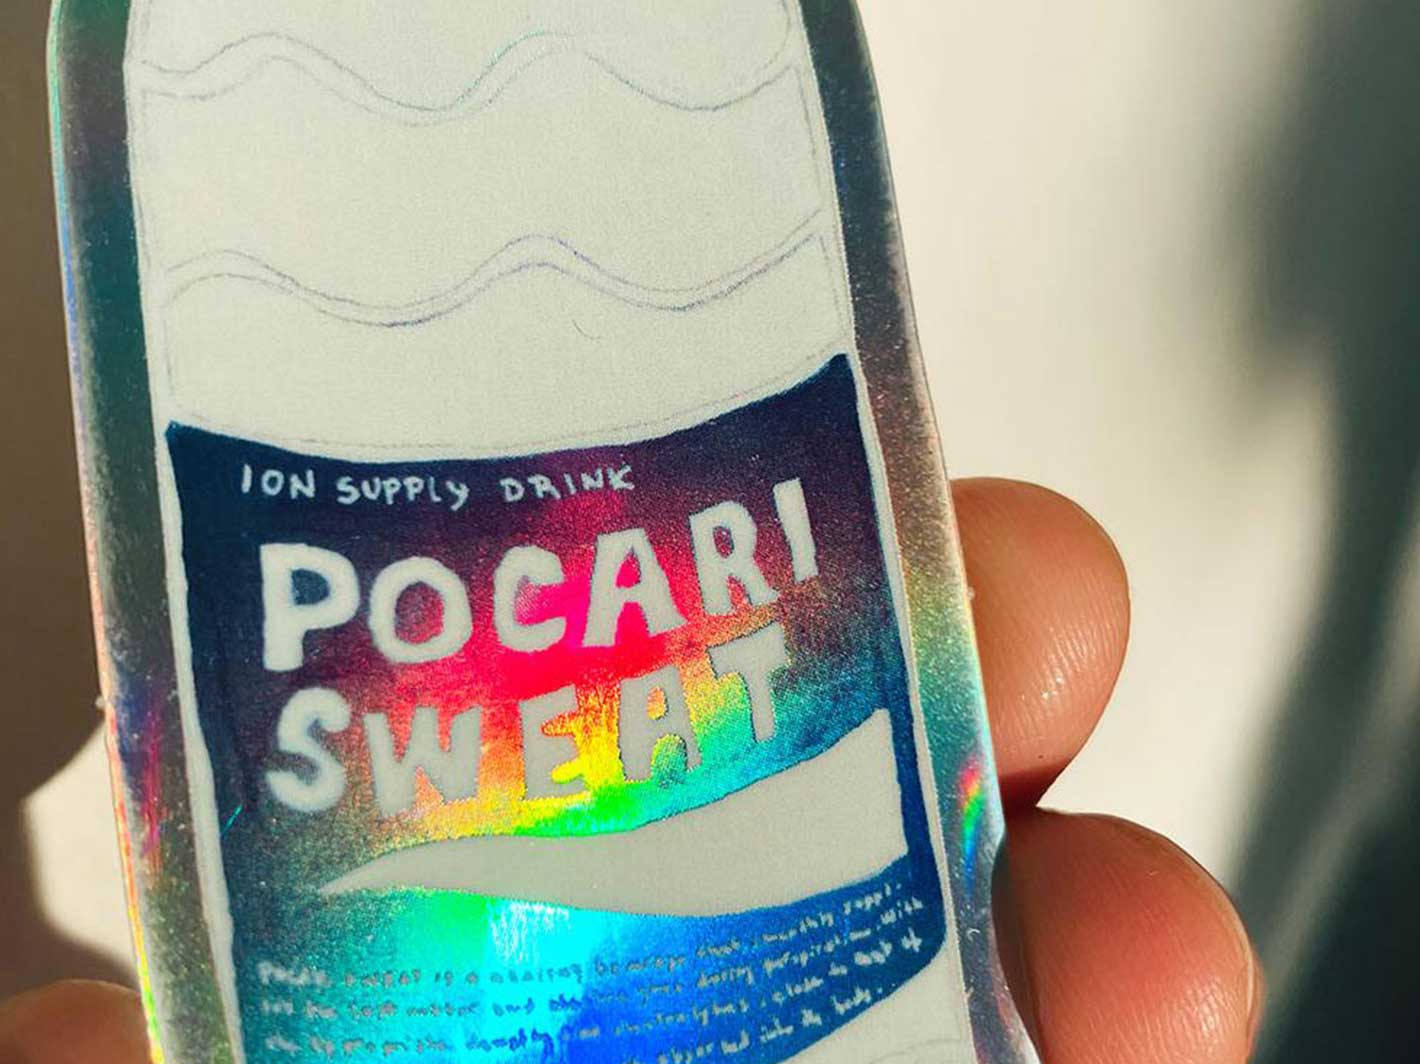 Die Cut Pocari Sweat Holo Sticker